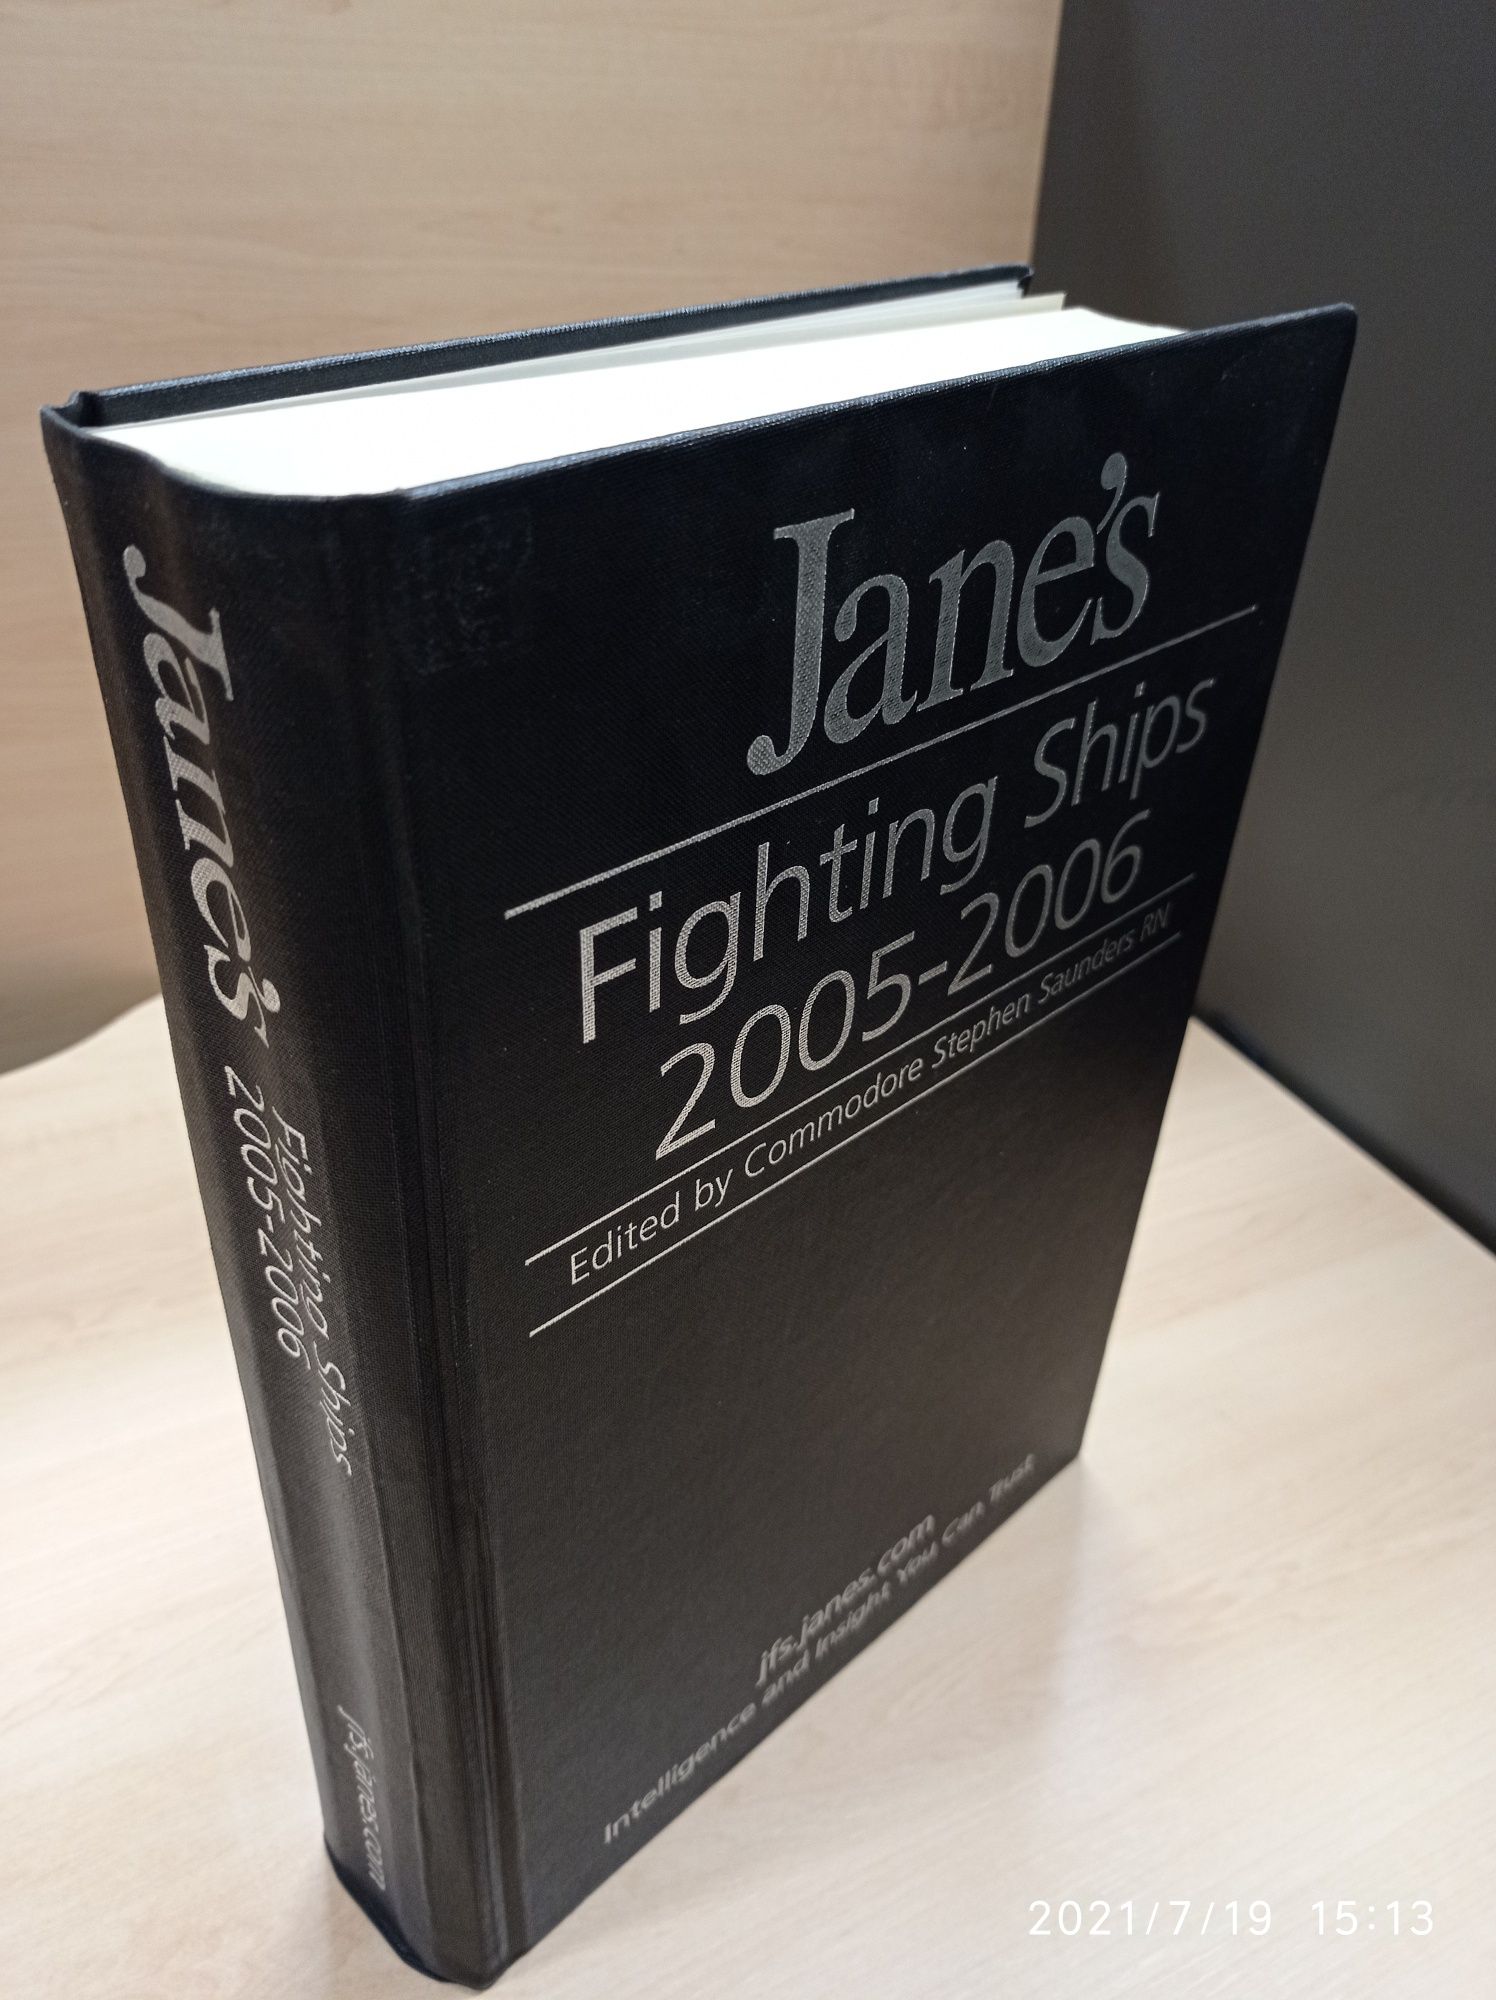 Livro Jane's Fighting Ships de 2005/2006